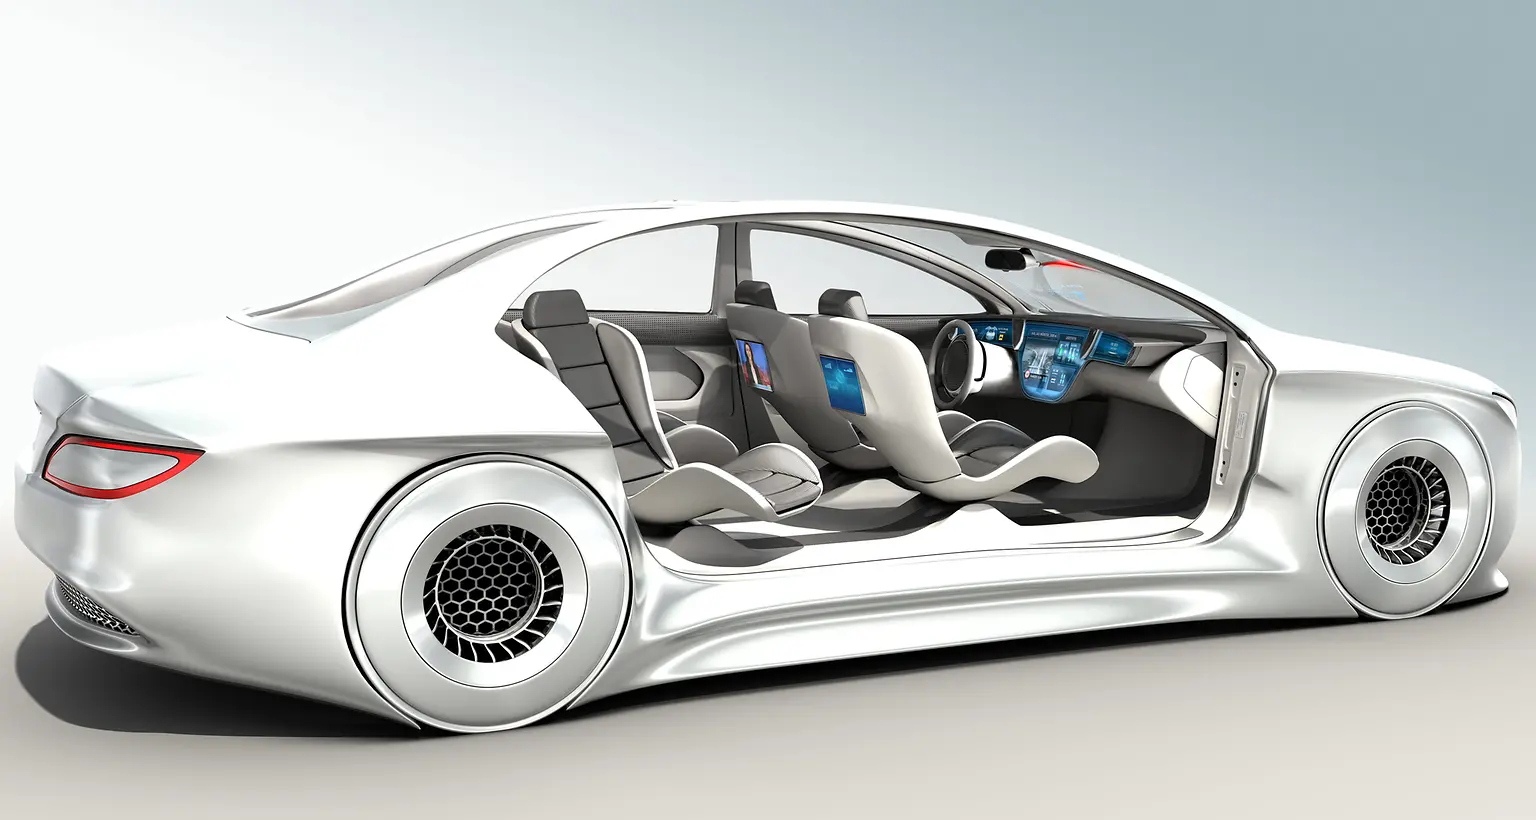 
The new formulation delivers design flexibility and automotive-grade reliability.